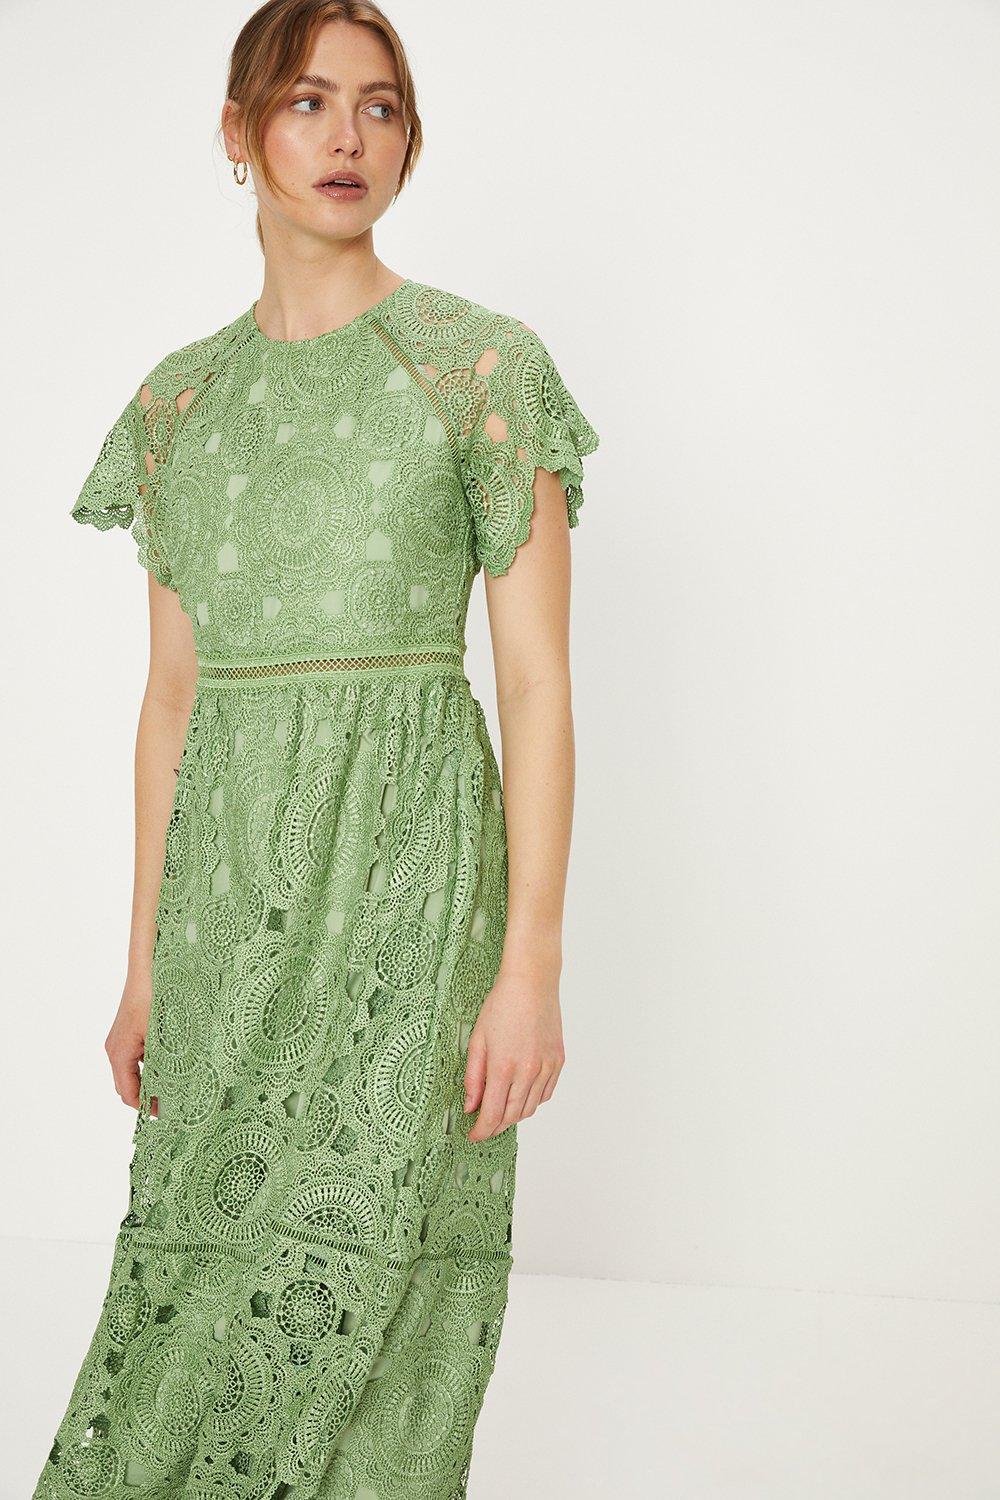 Premium Floral Lace Trim Insert Cap Sleeve Midi Dress